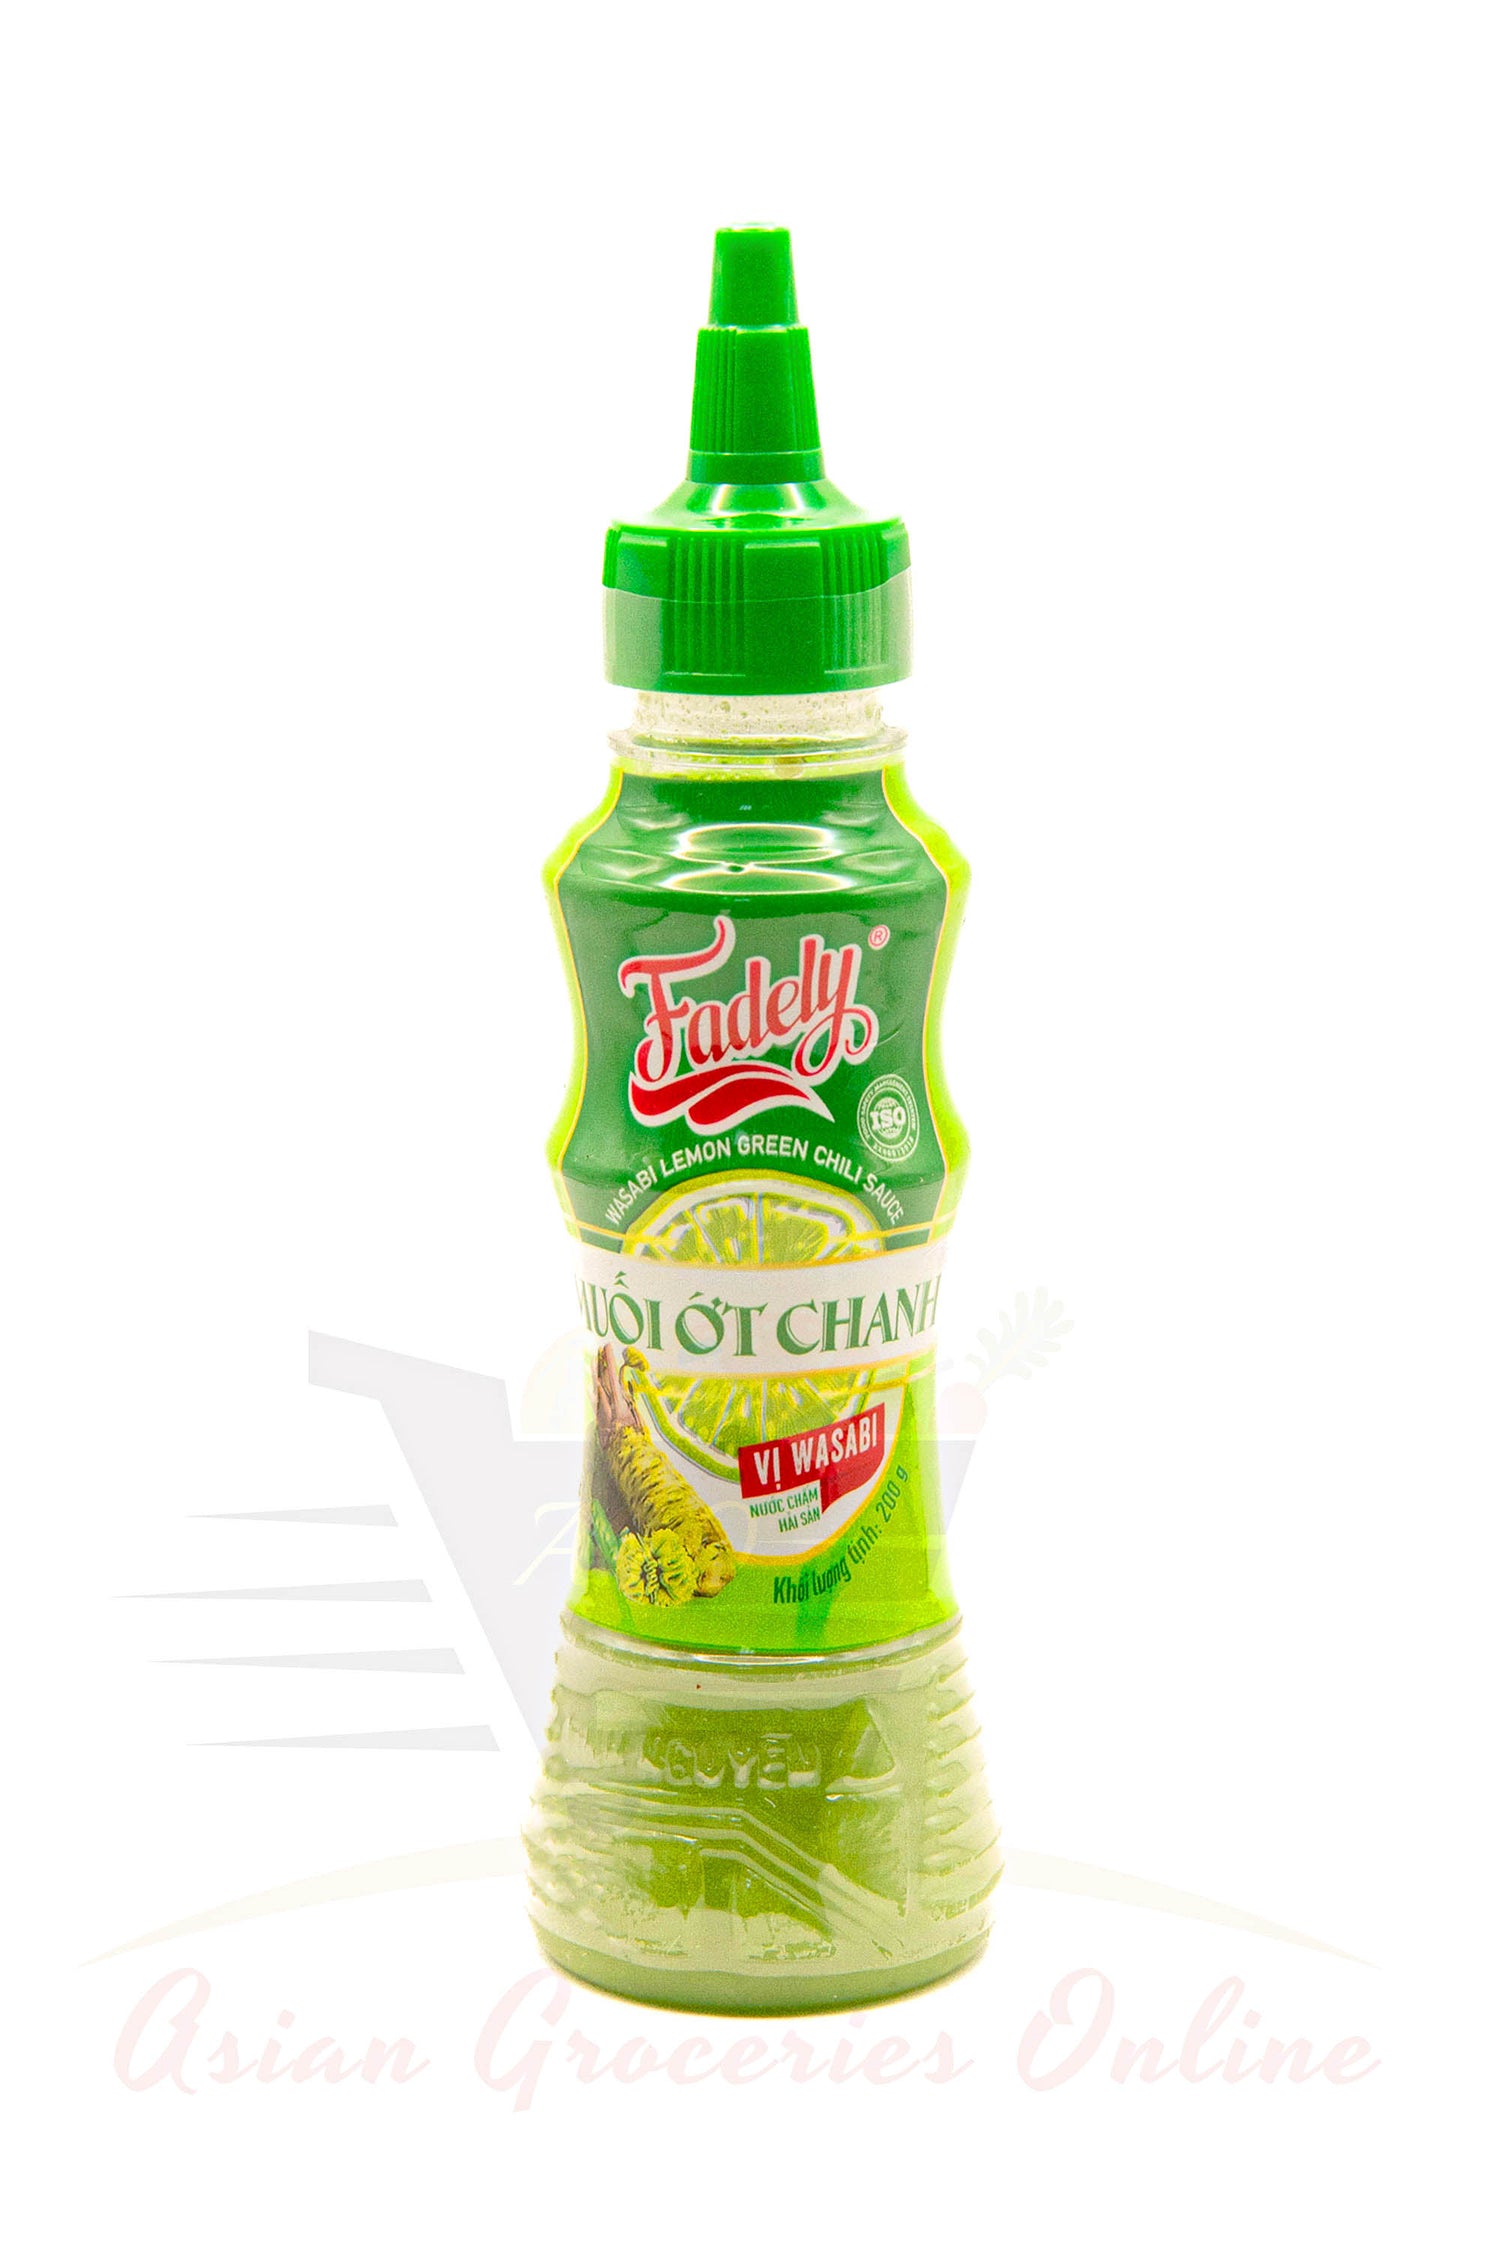 Tinh Nguyen Wasabi Lemon Chili Sauce (Muoi Ot Chanh Wasabi) 200g *Buy 1 get 1 free*